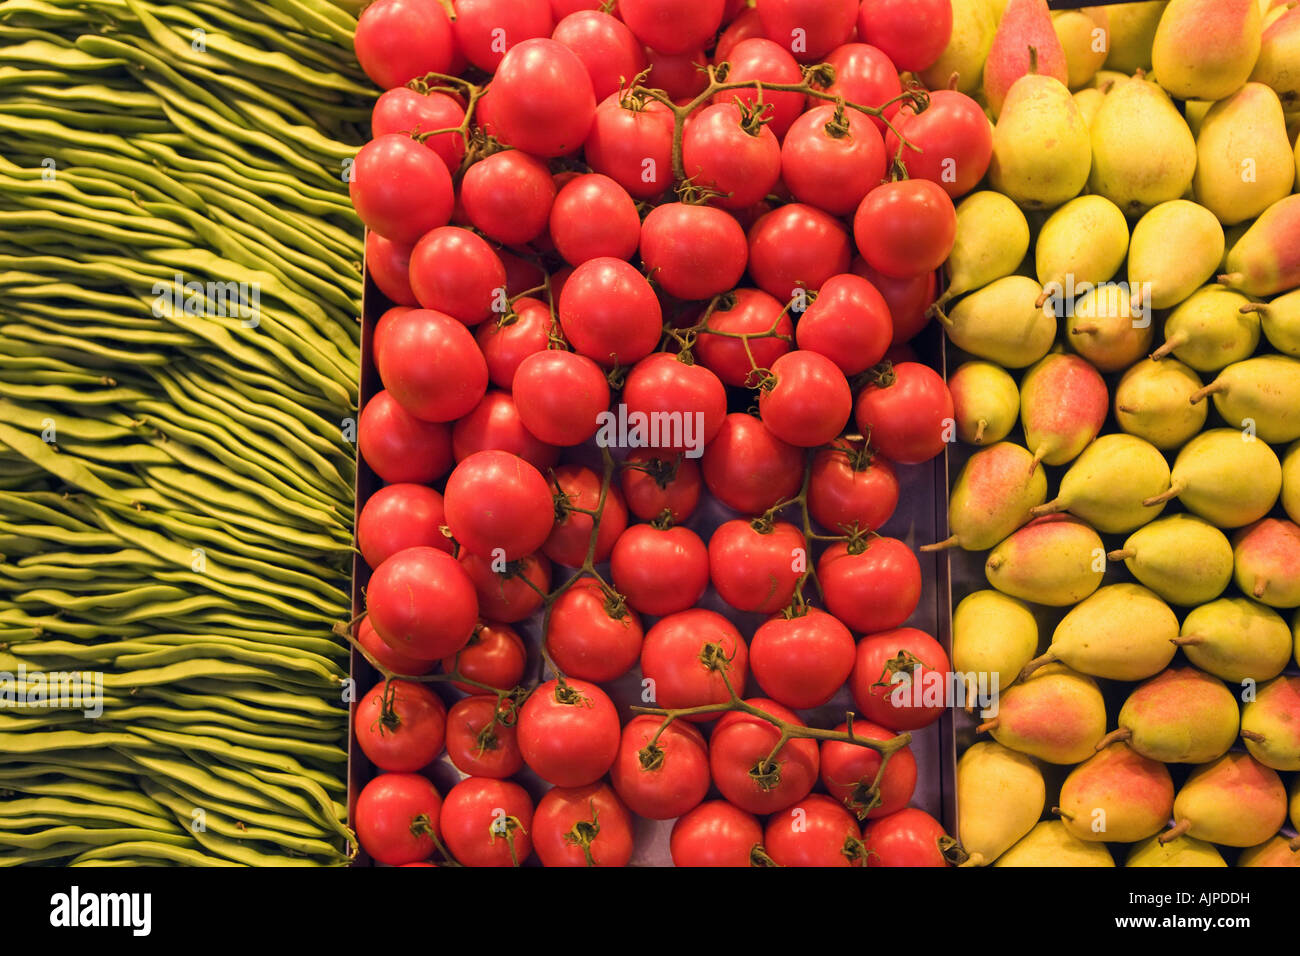 spain Barcelona market hall La Boqueria fruits beans tomatoes and pears Stock Photo